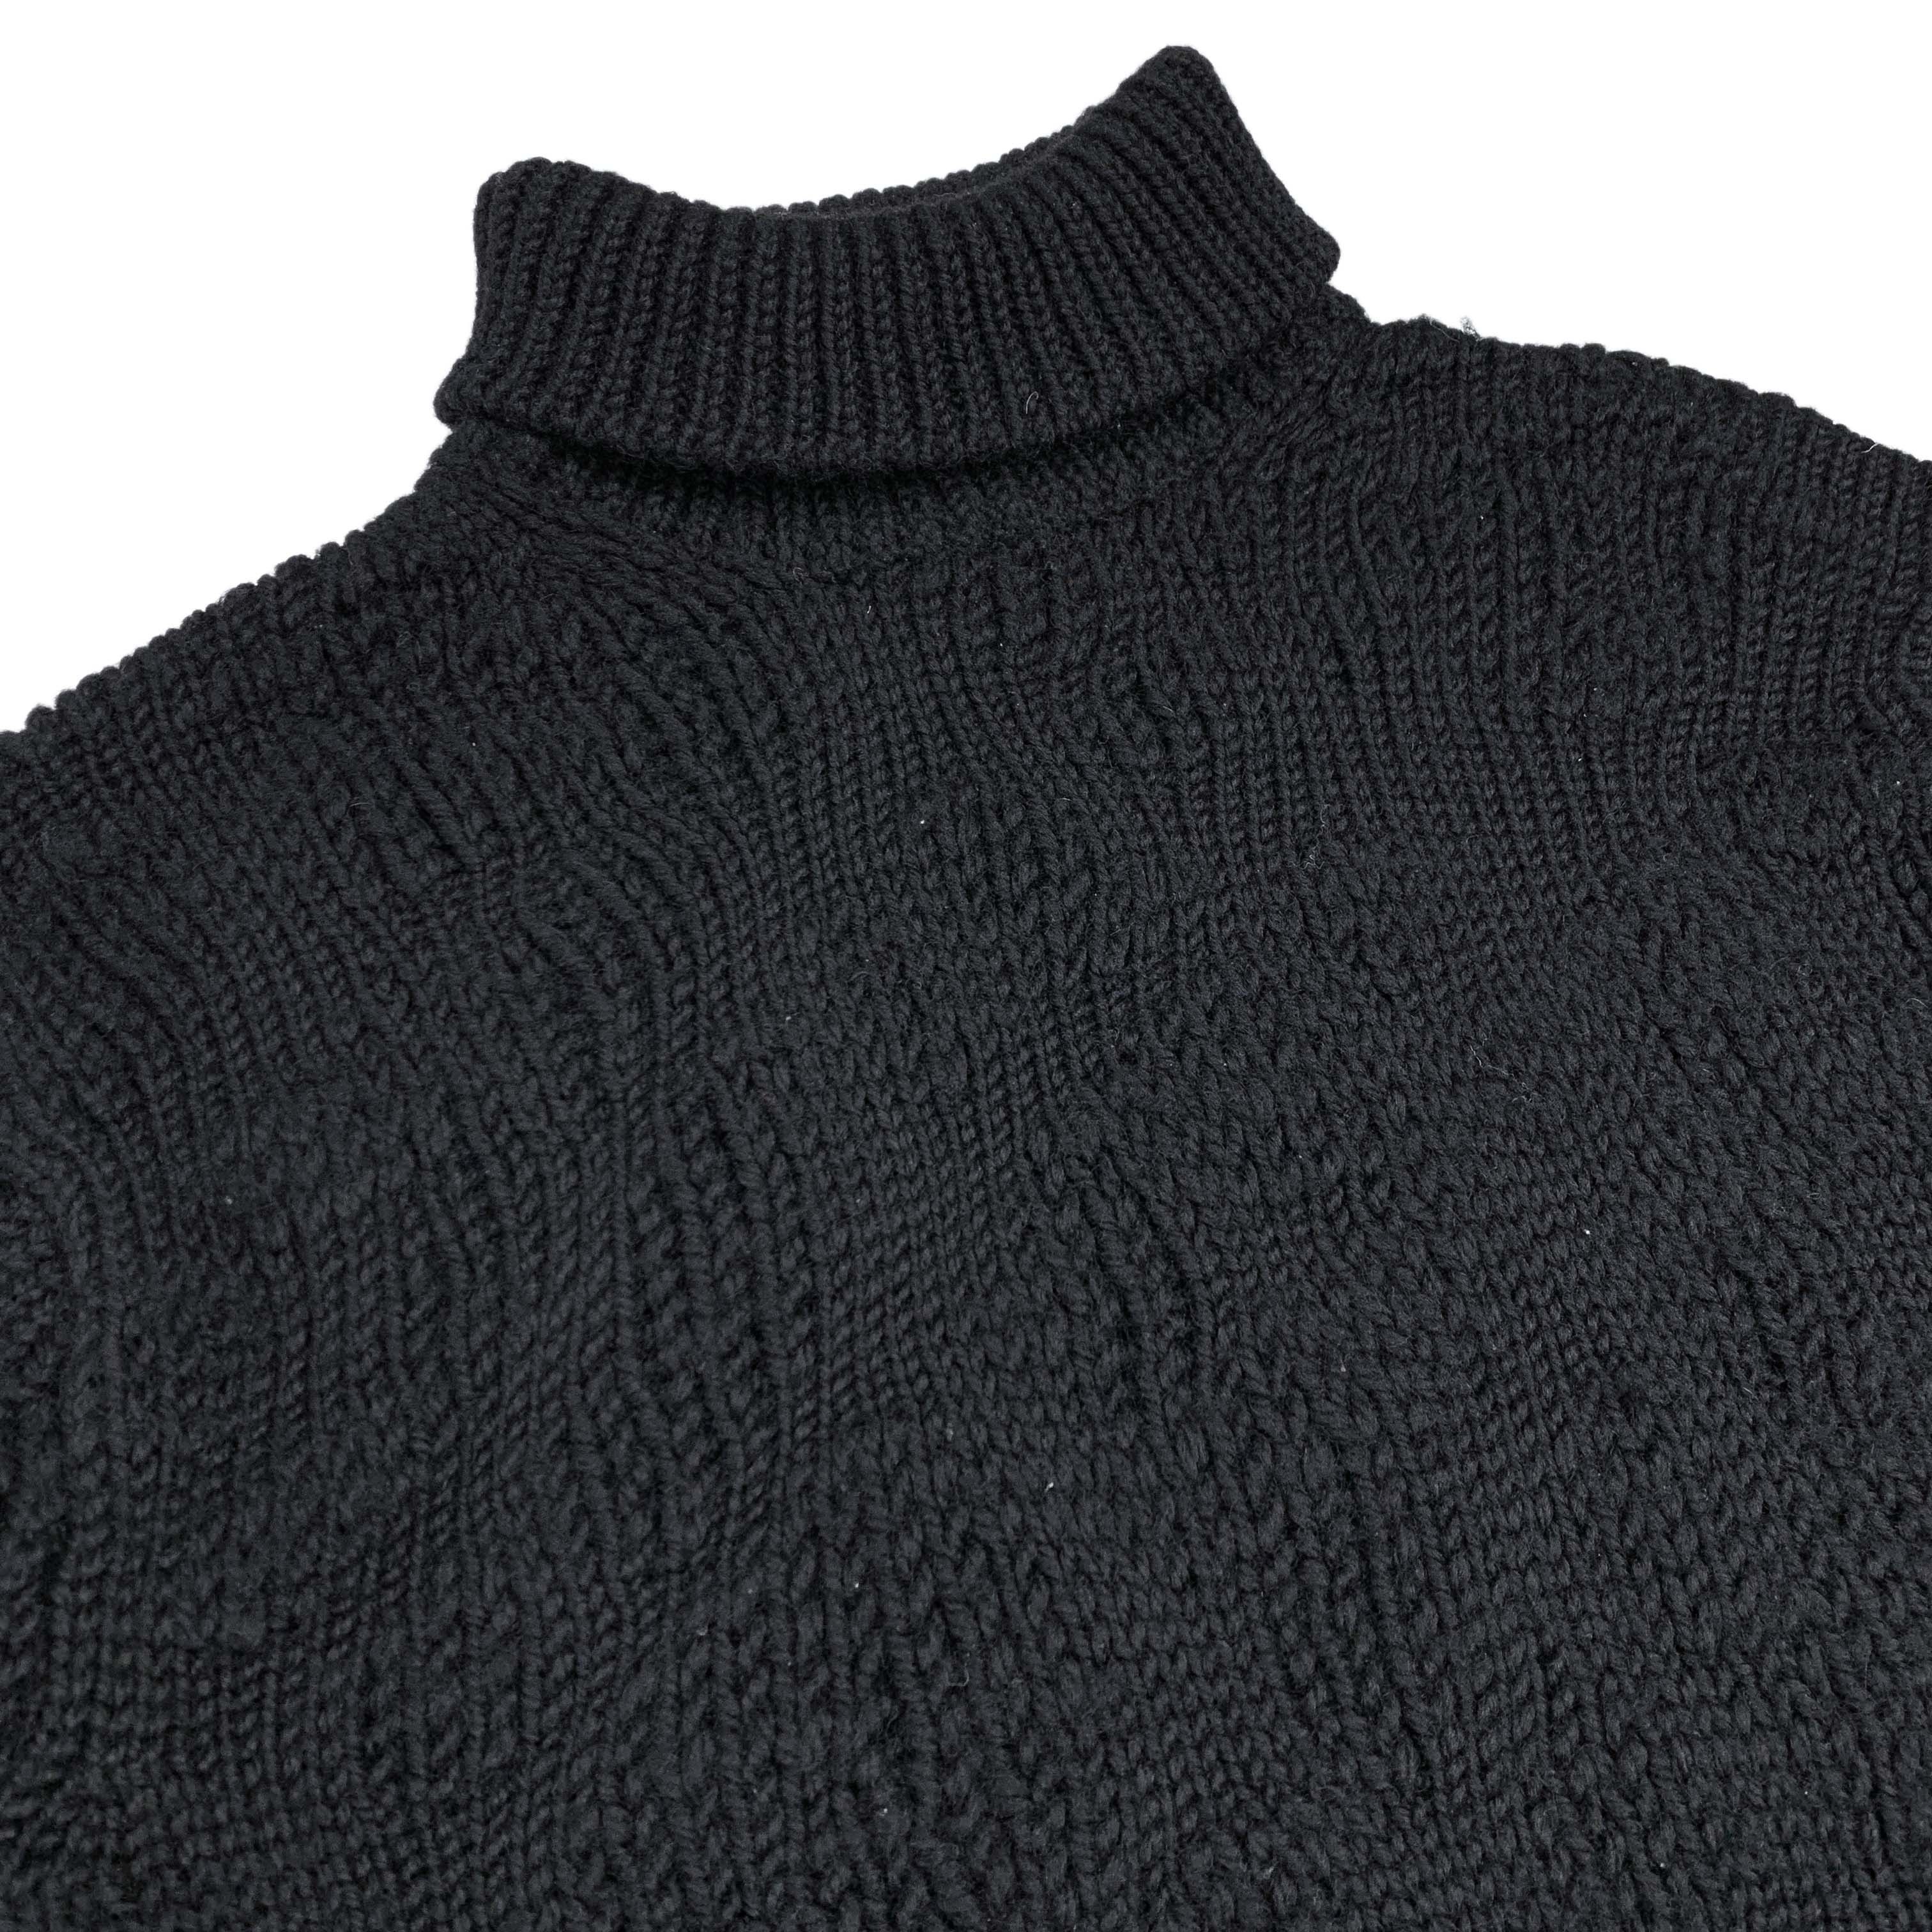 AW98 Distortion Knit Wool Turtleneck Sweater - 3